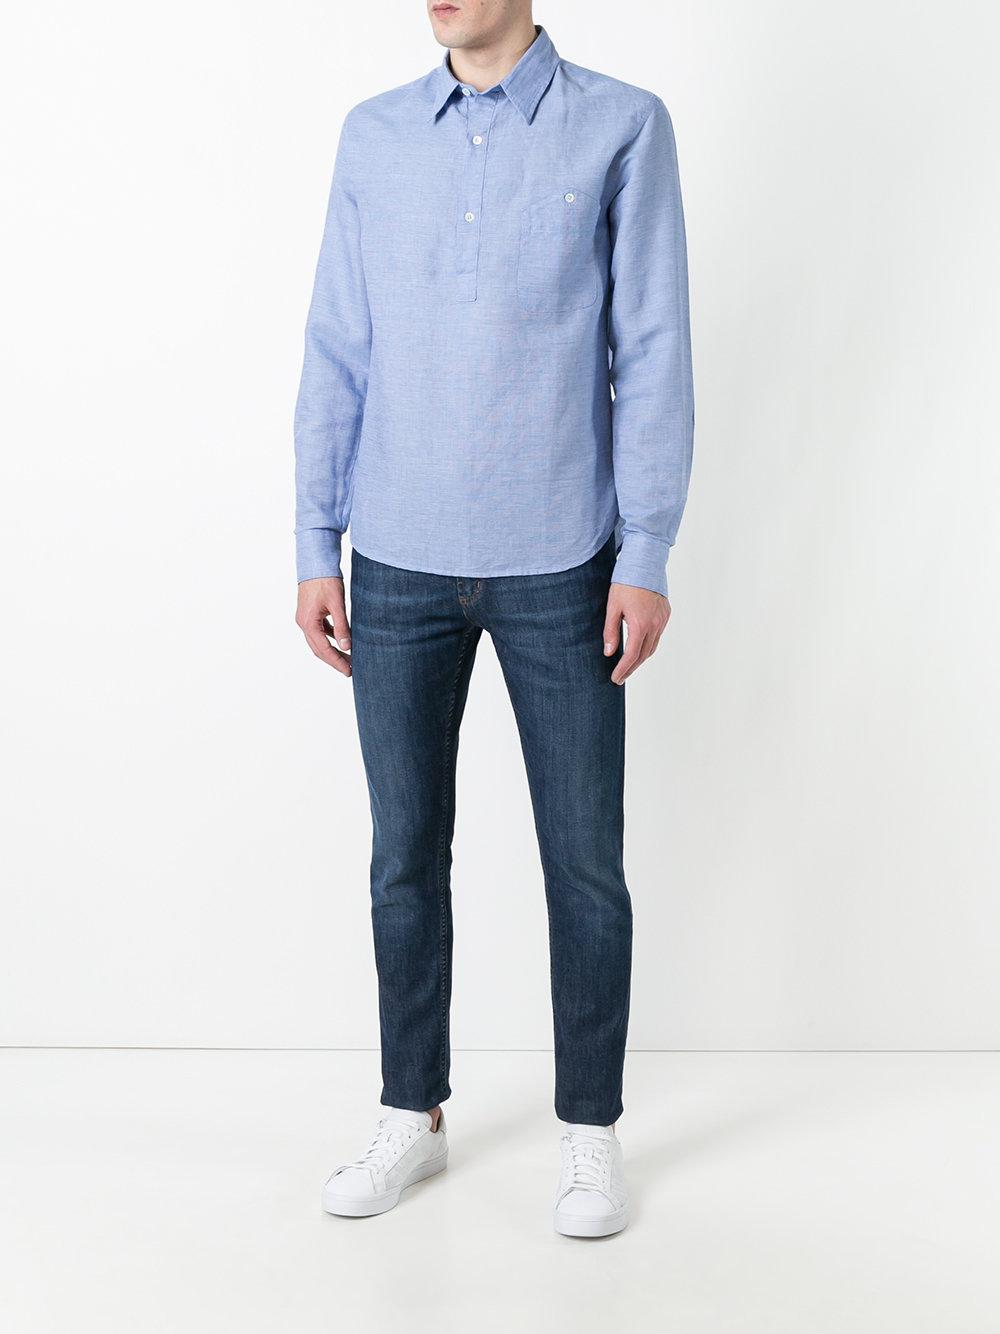 Lyst - Barena Henley Shirt in Blue for Men